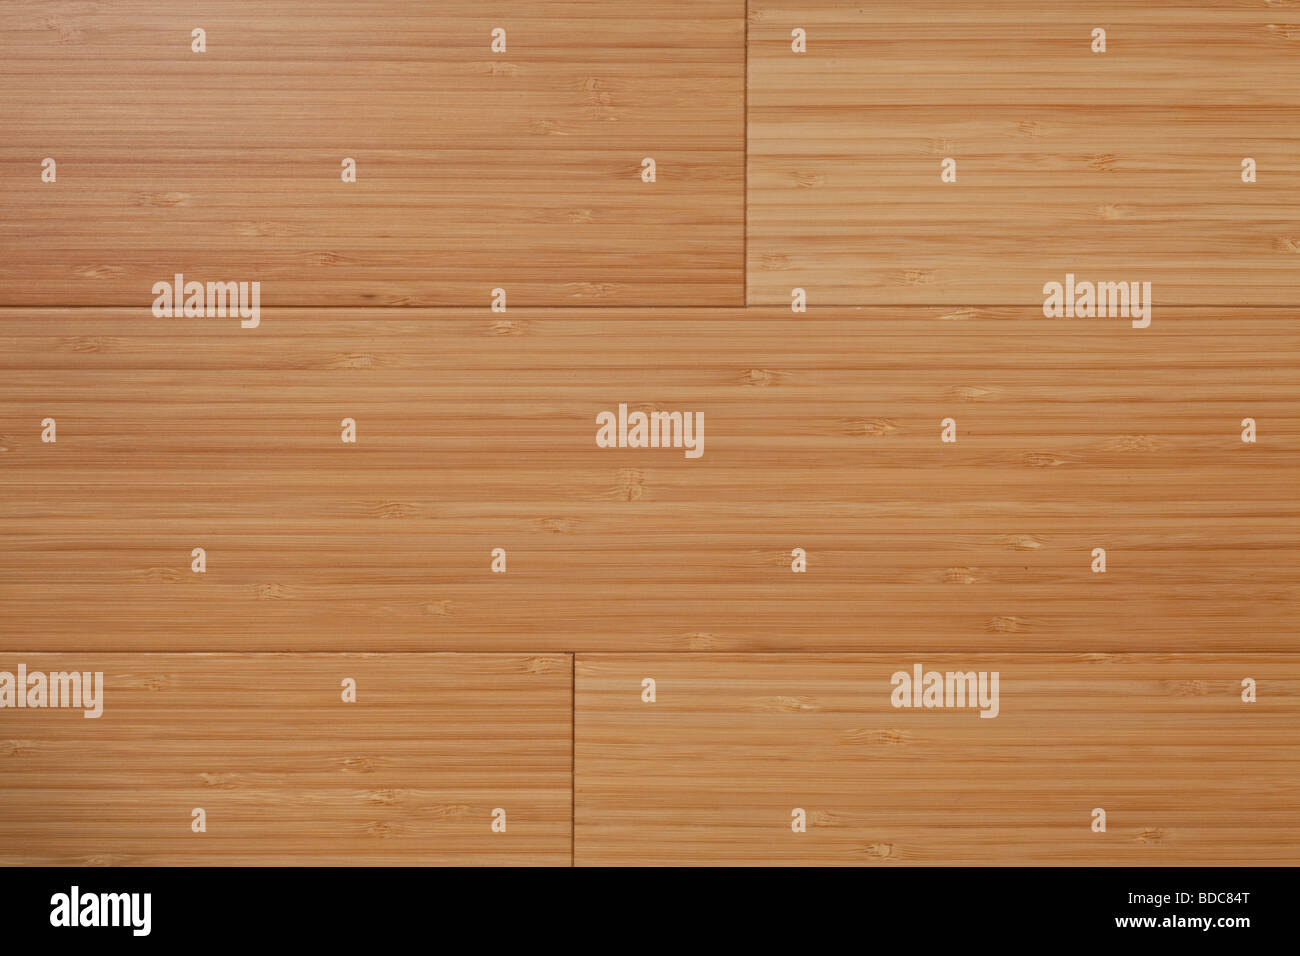 bamboo wood planked flooring background Stock Photo